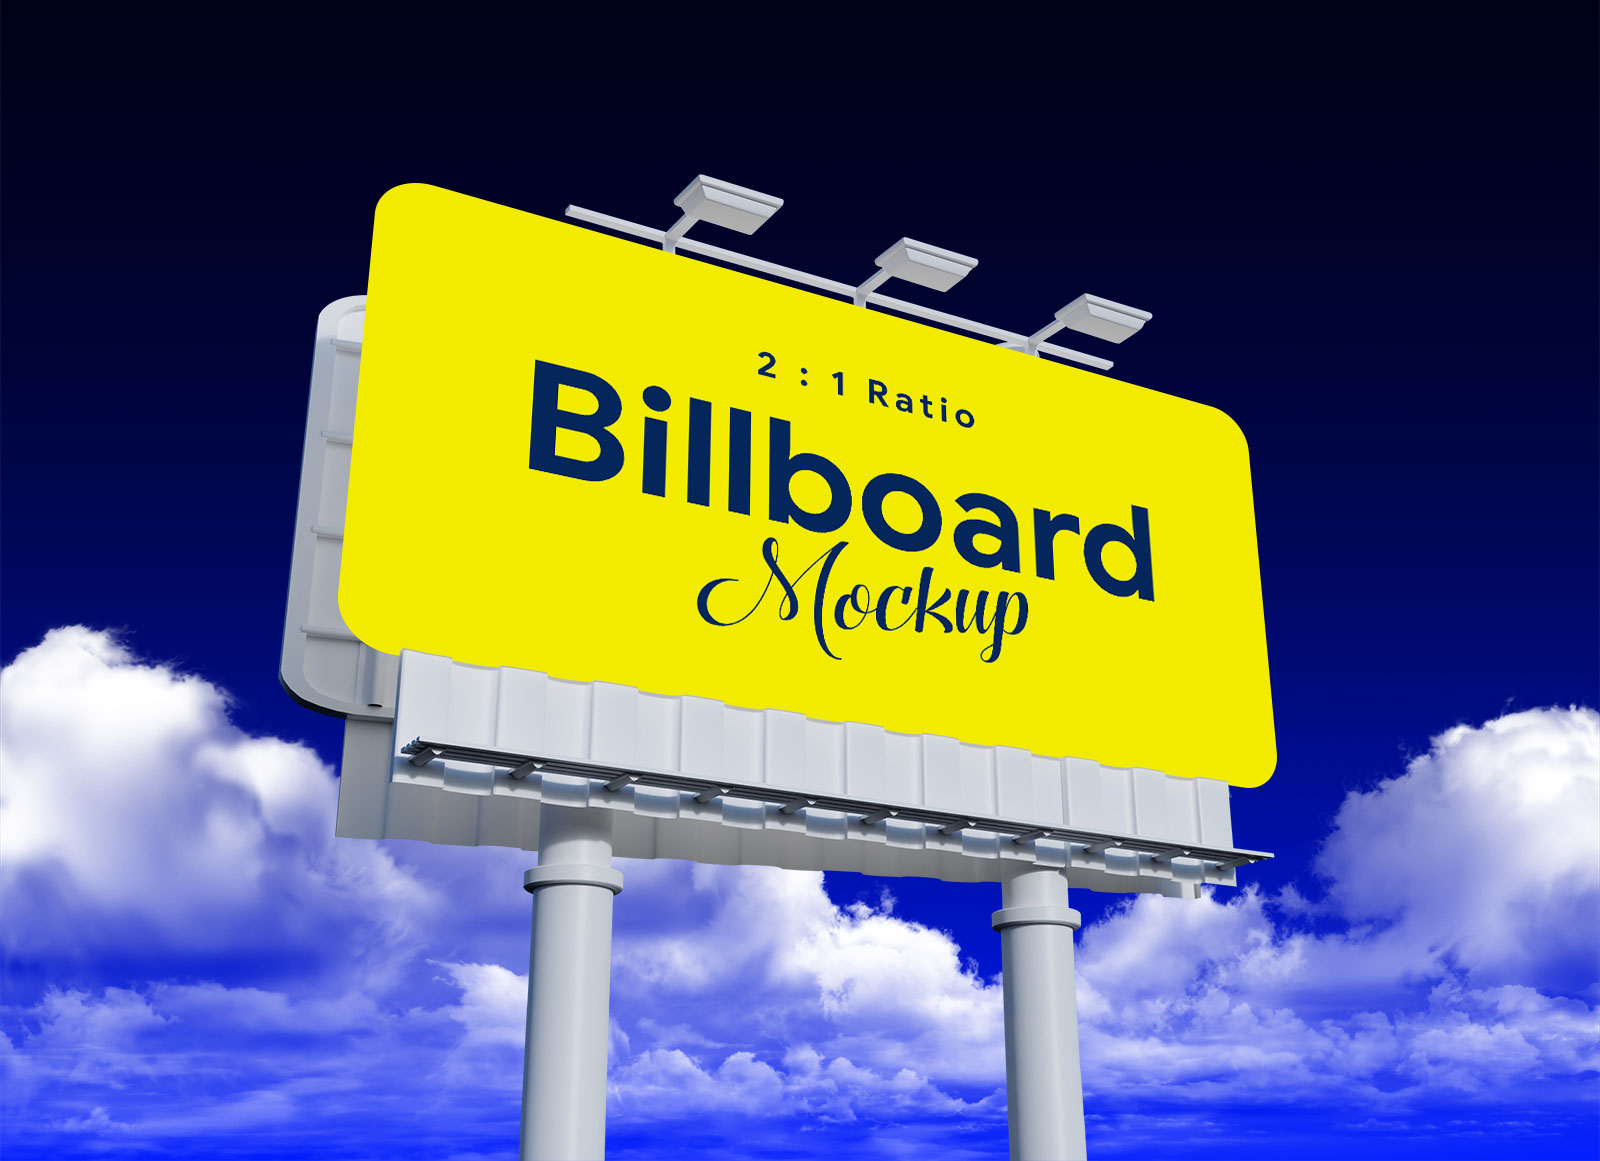 Объединенные углы Billboard / Gording Mockup